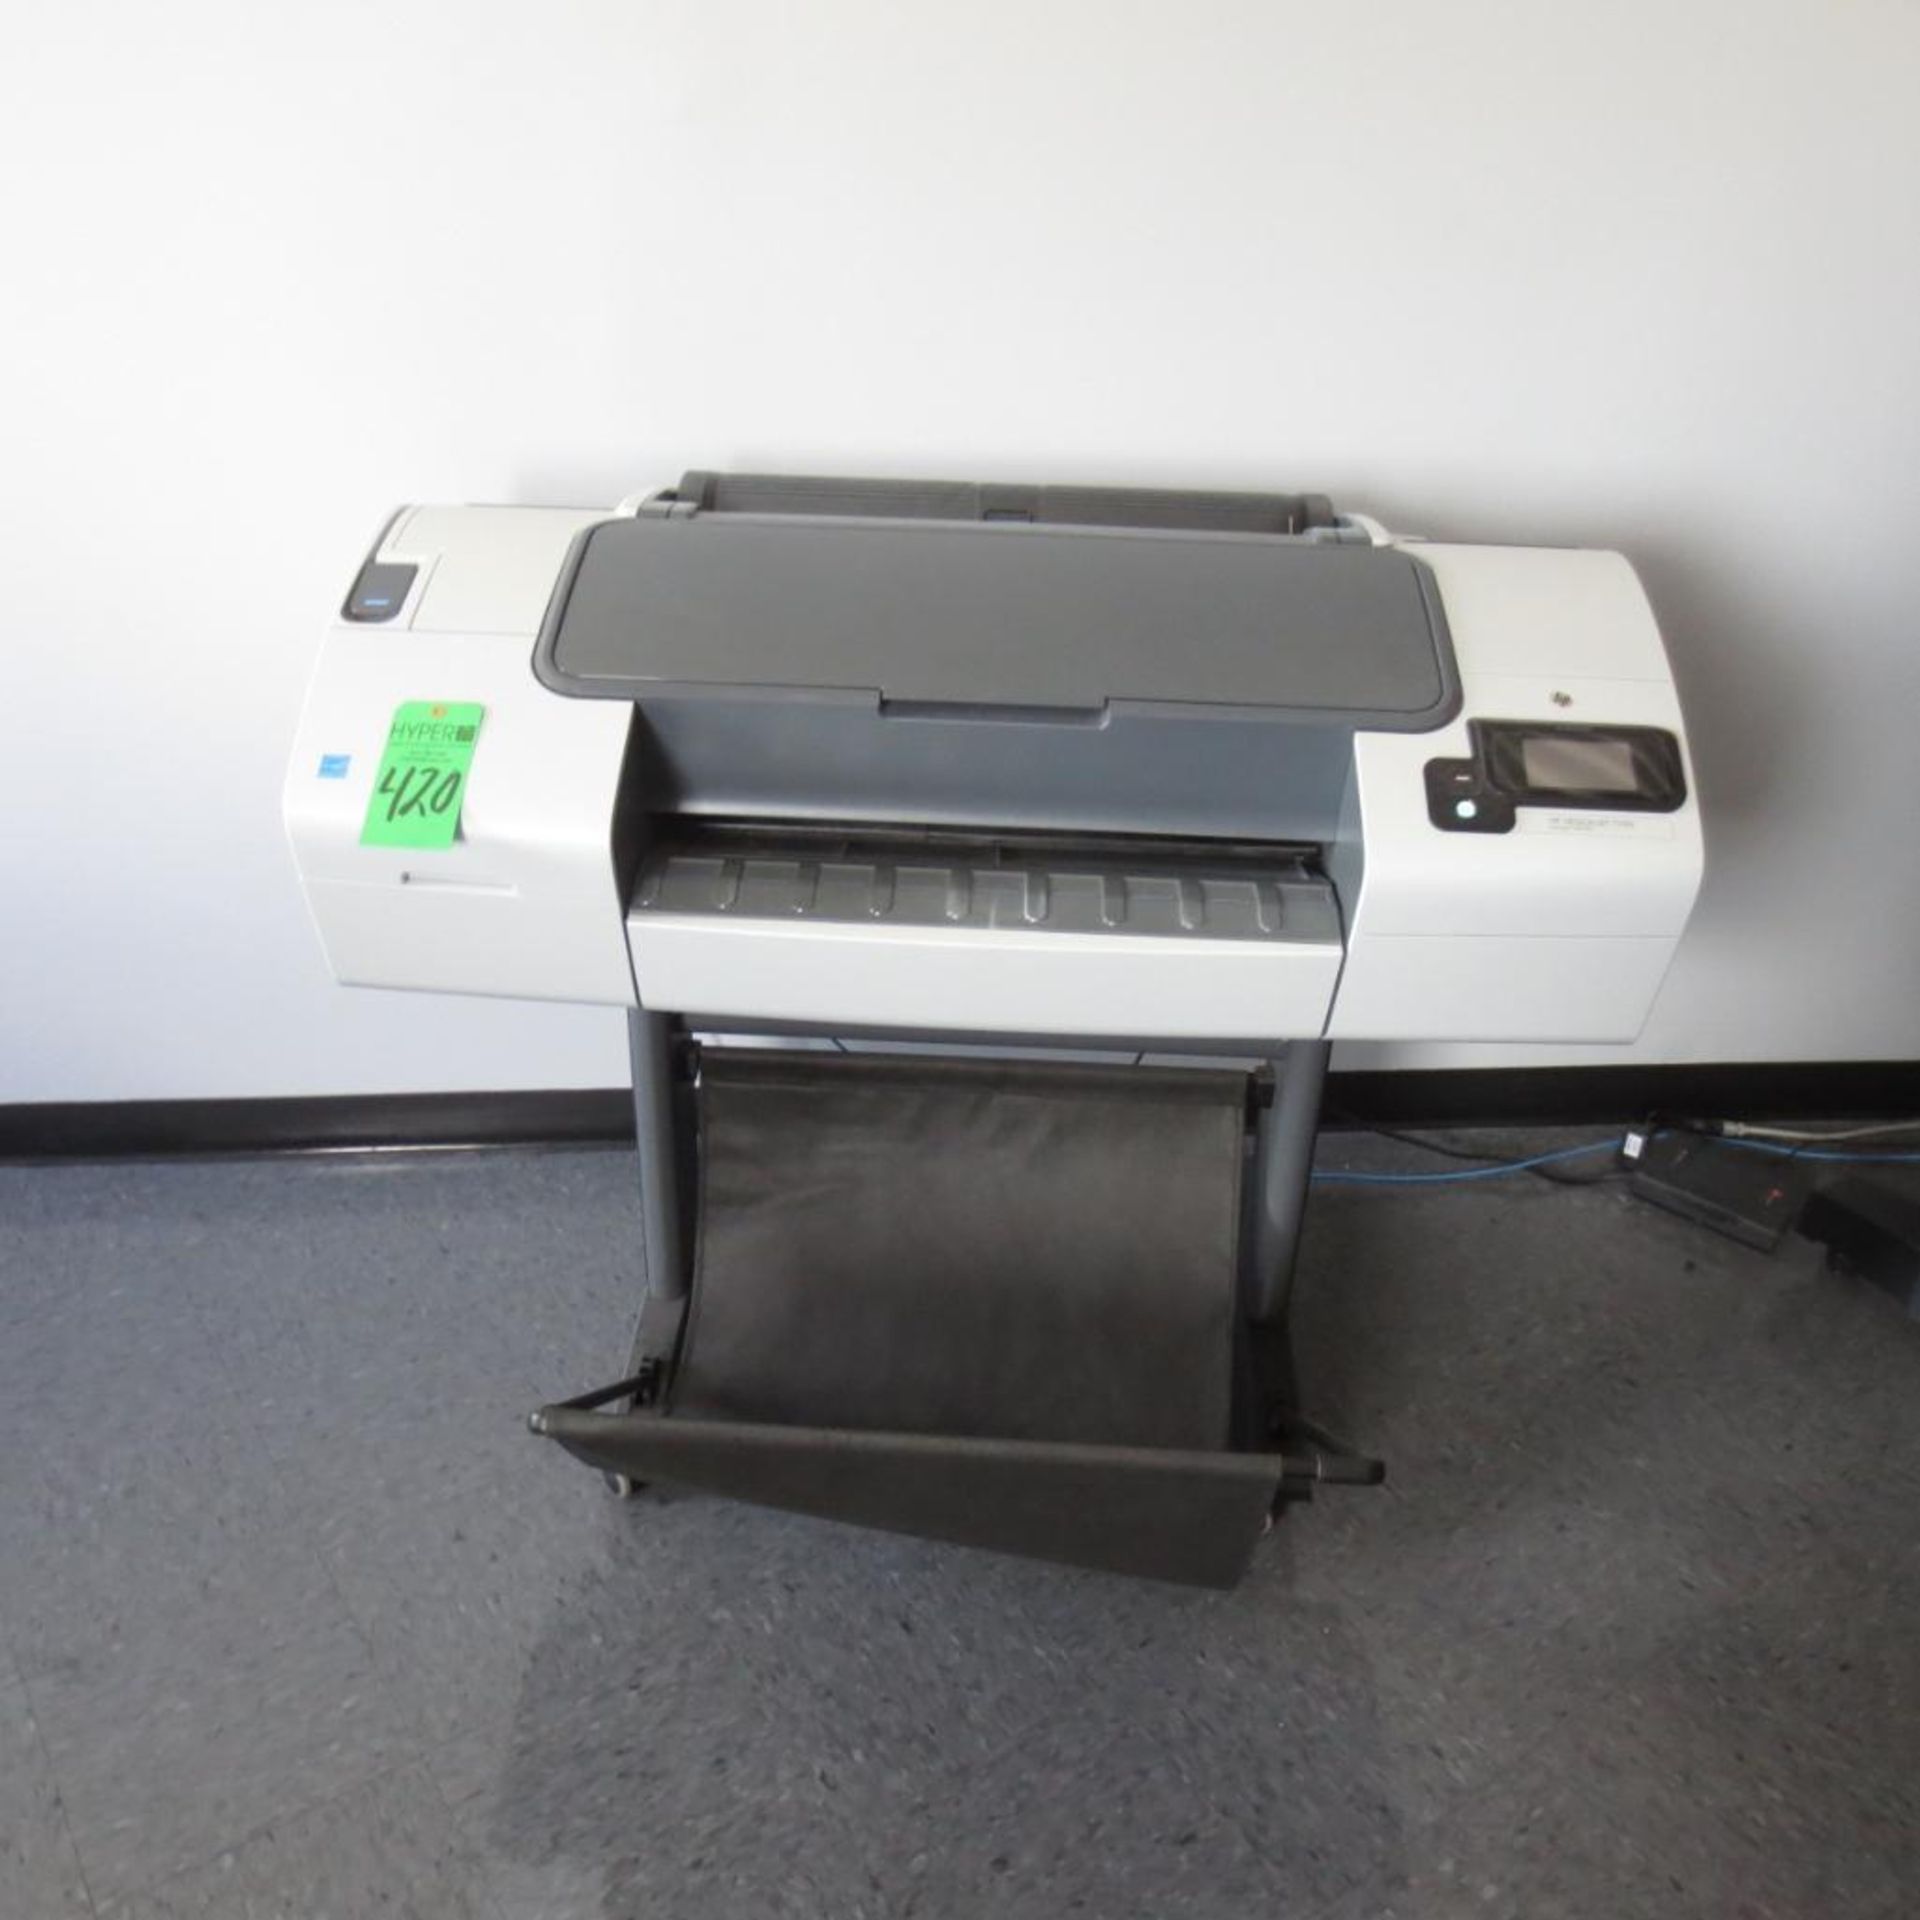 HP Design Jet T790 Post Script E Printer.**Lot Located at 2395 Dakota Drive, Grafton, WI 53024**